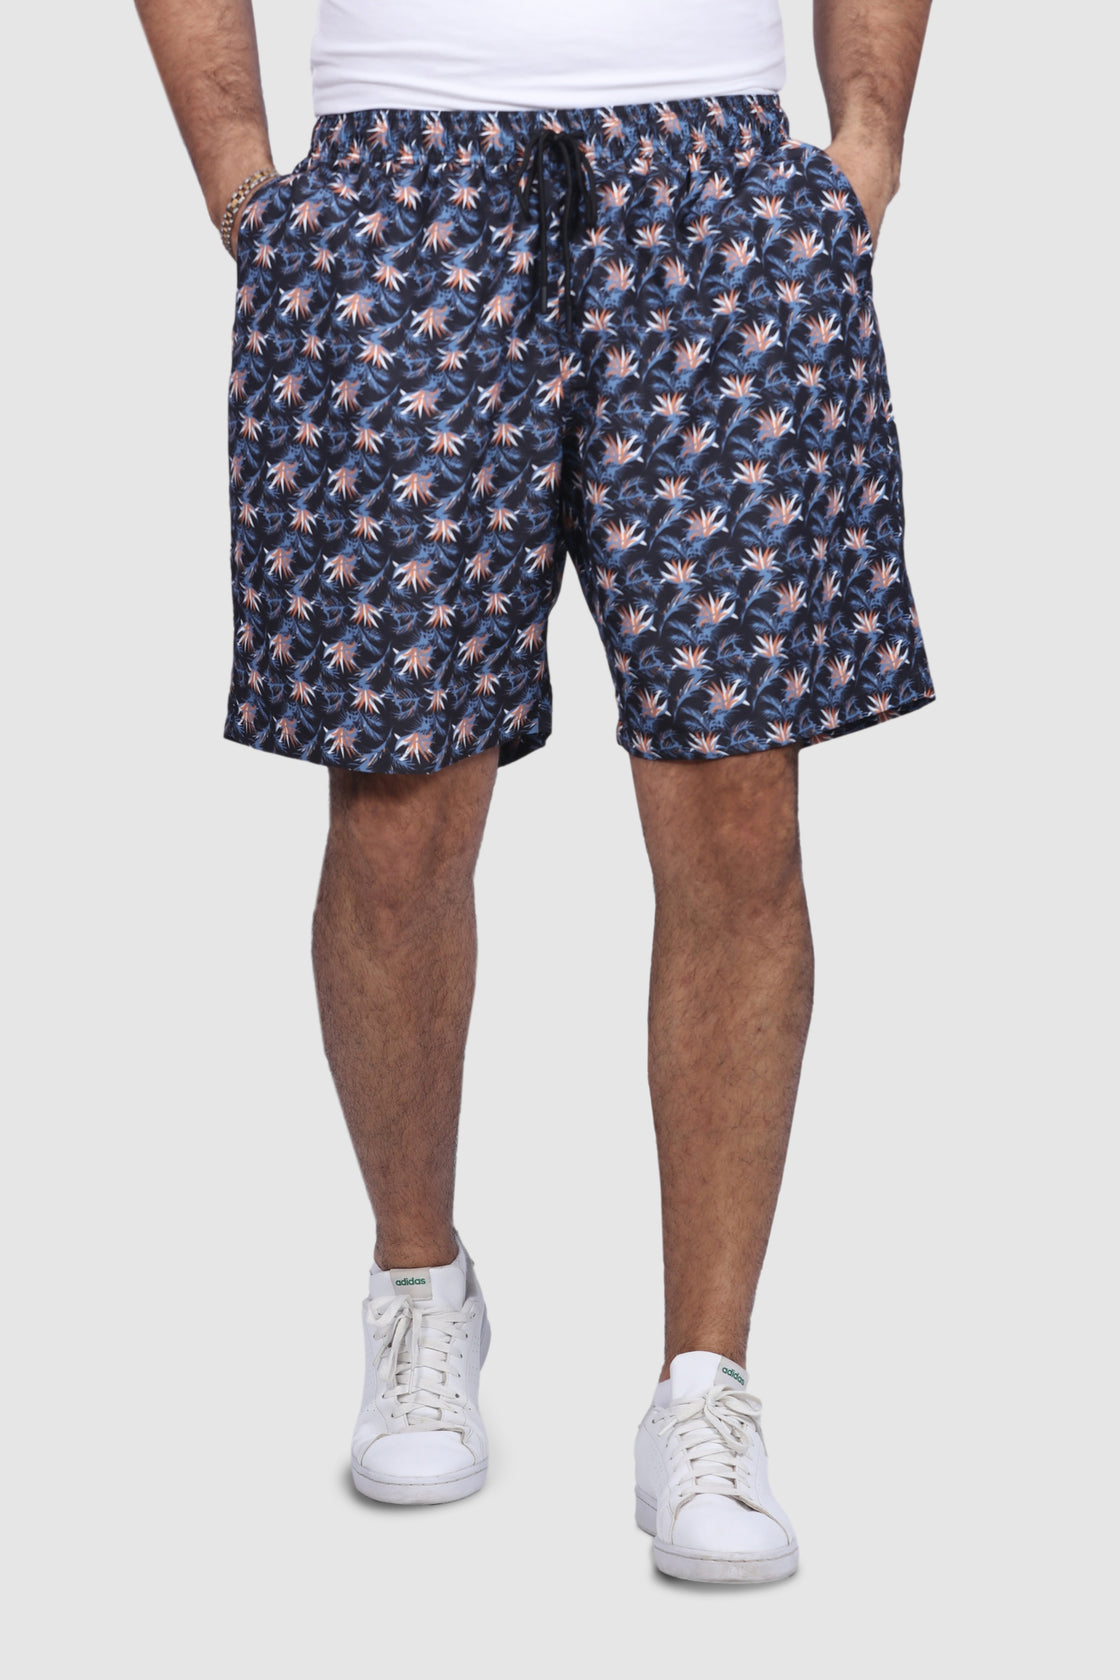 North 56°4 Printed Swim Shorts